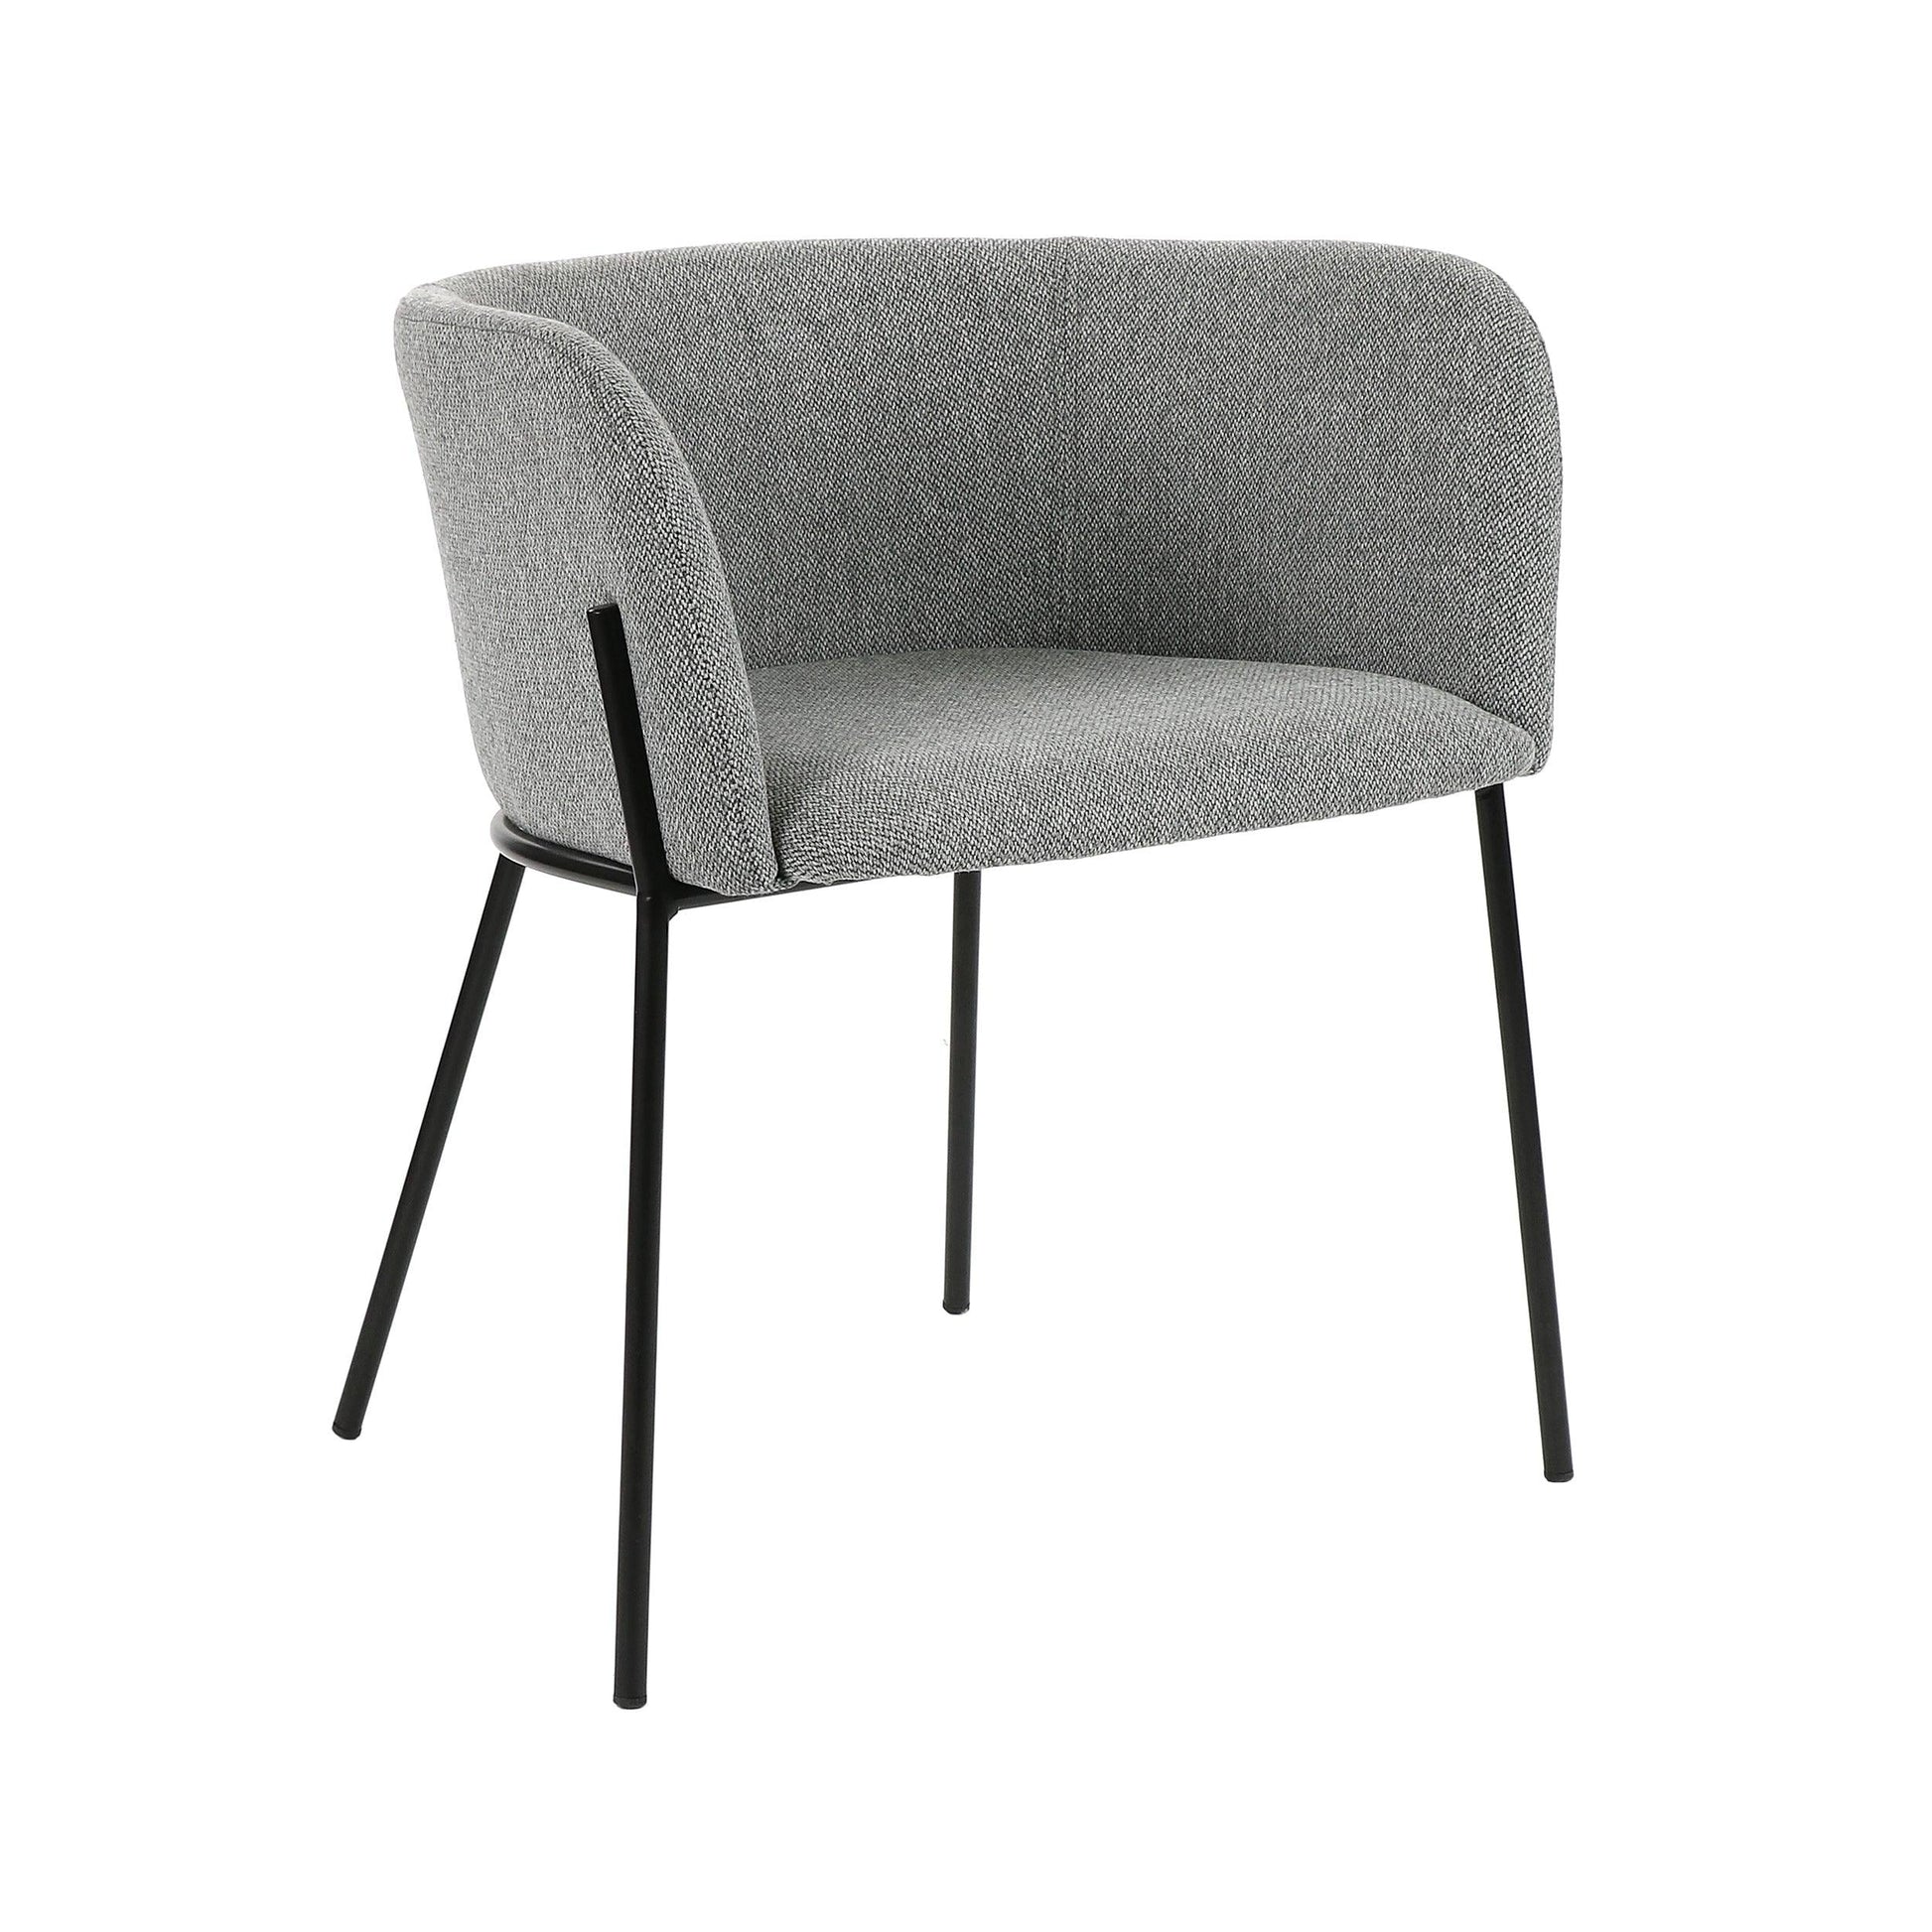 Fabric Chair W/ Metal Legs